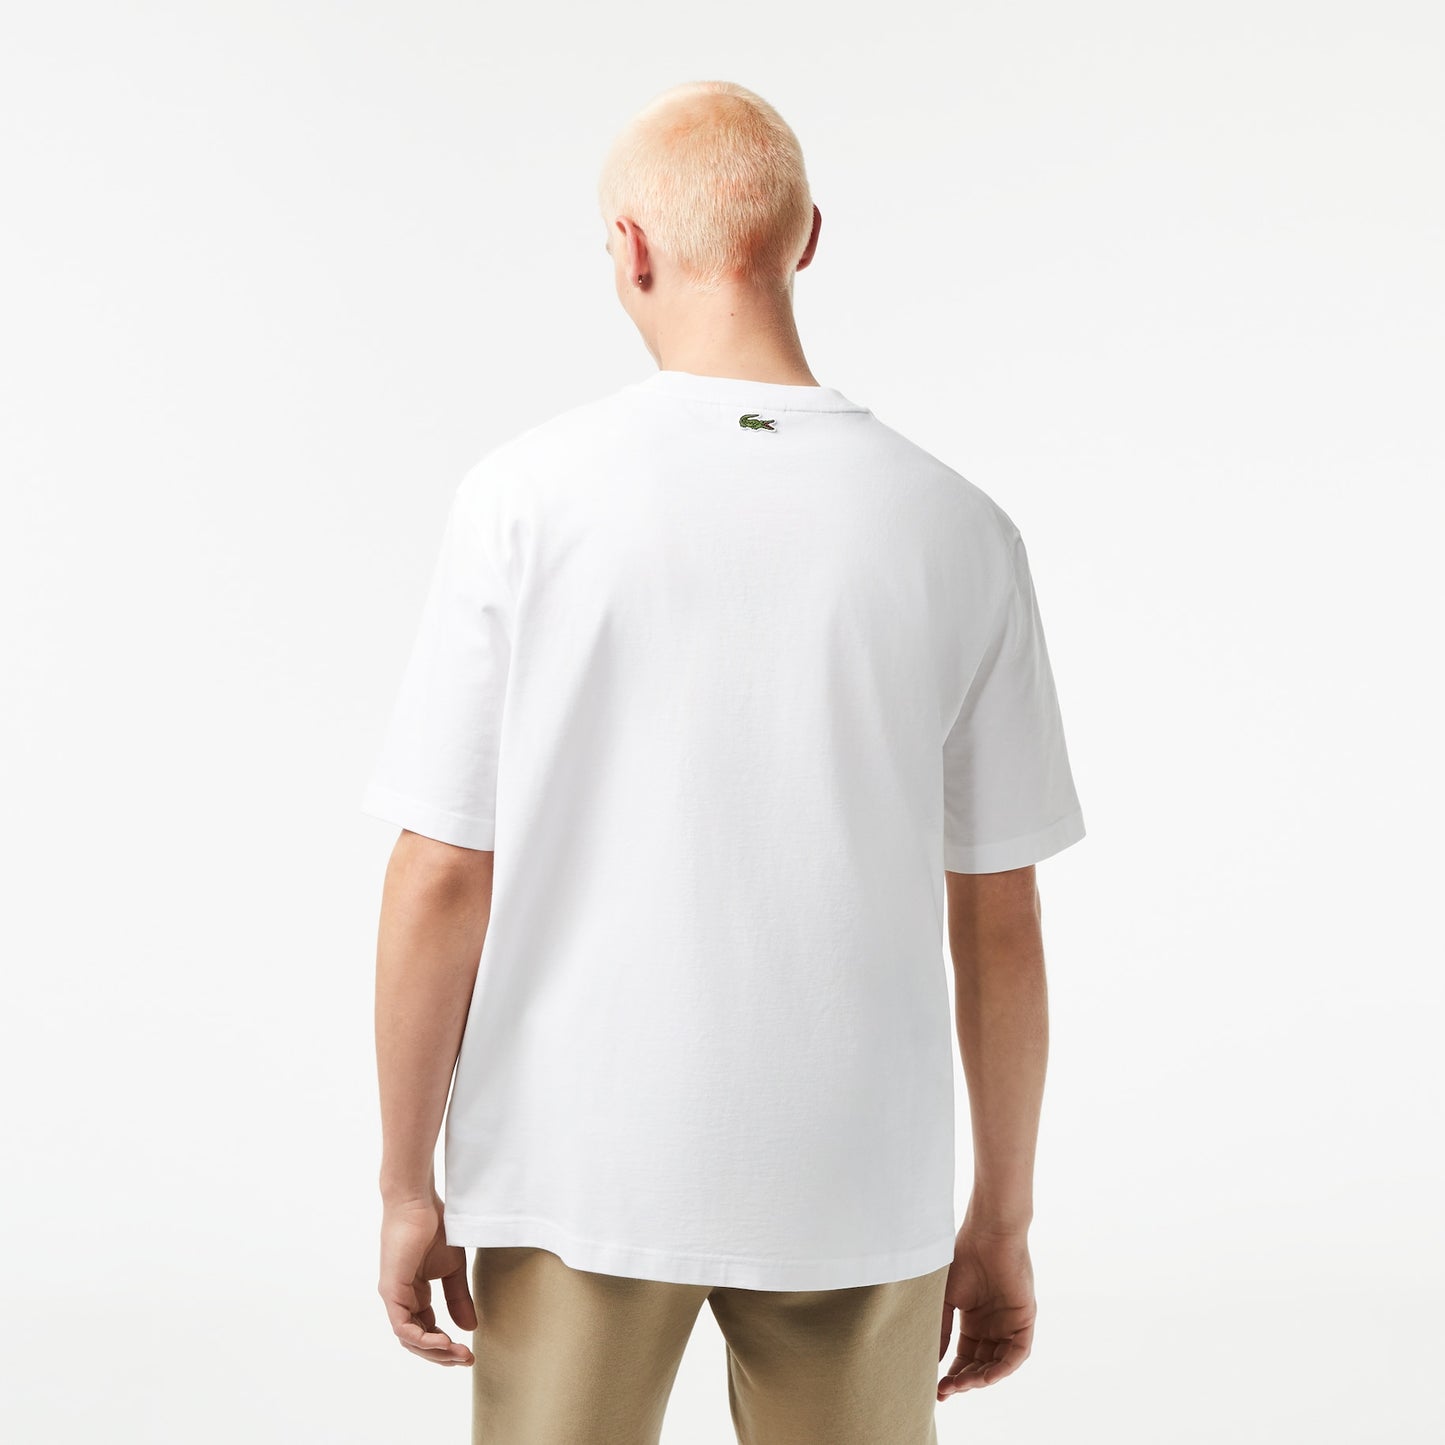 Lacoste - Men's Loose Fit Crocodile Print Crew Neck Shirt - White